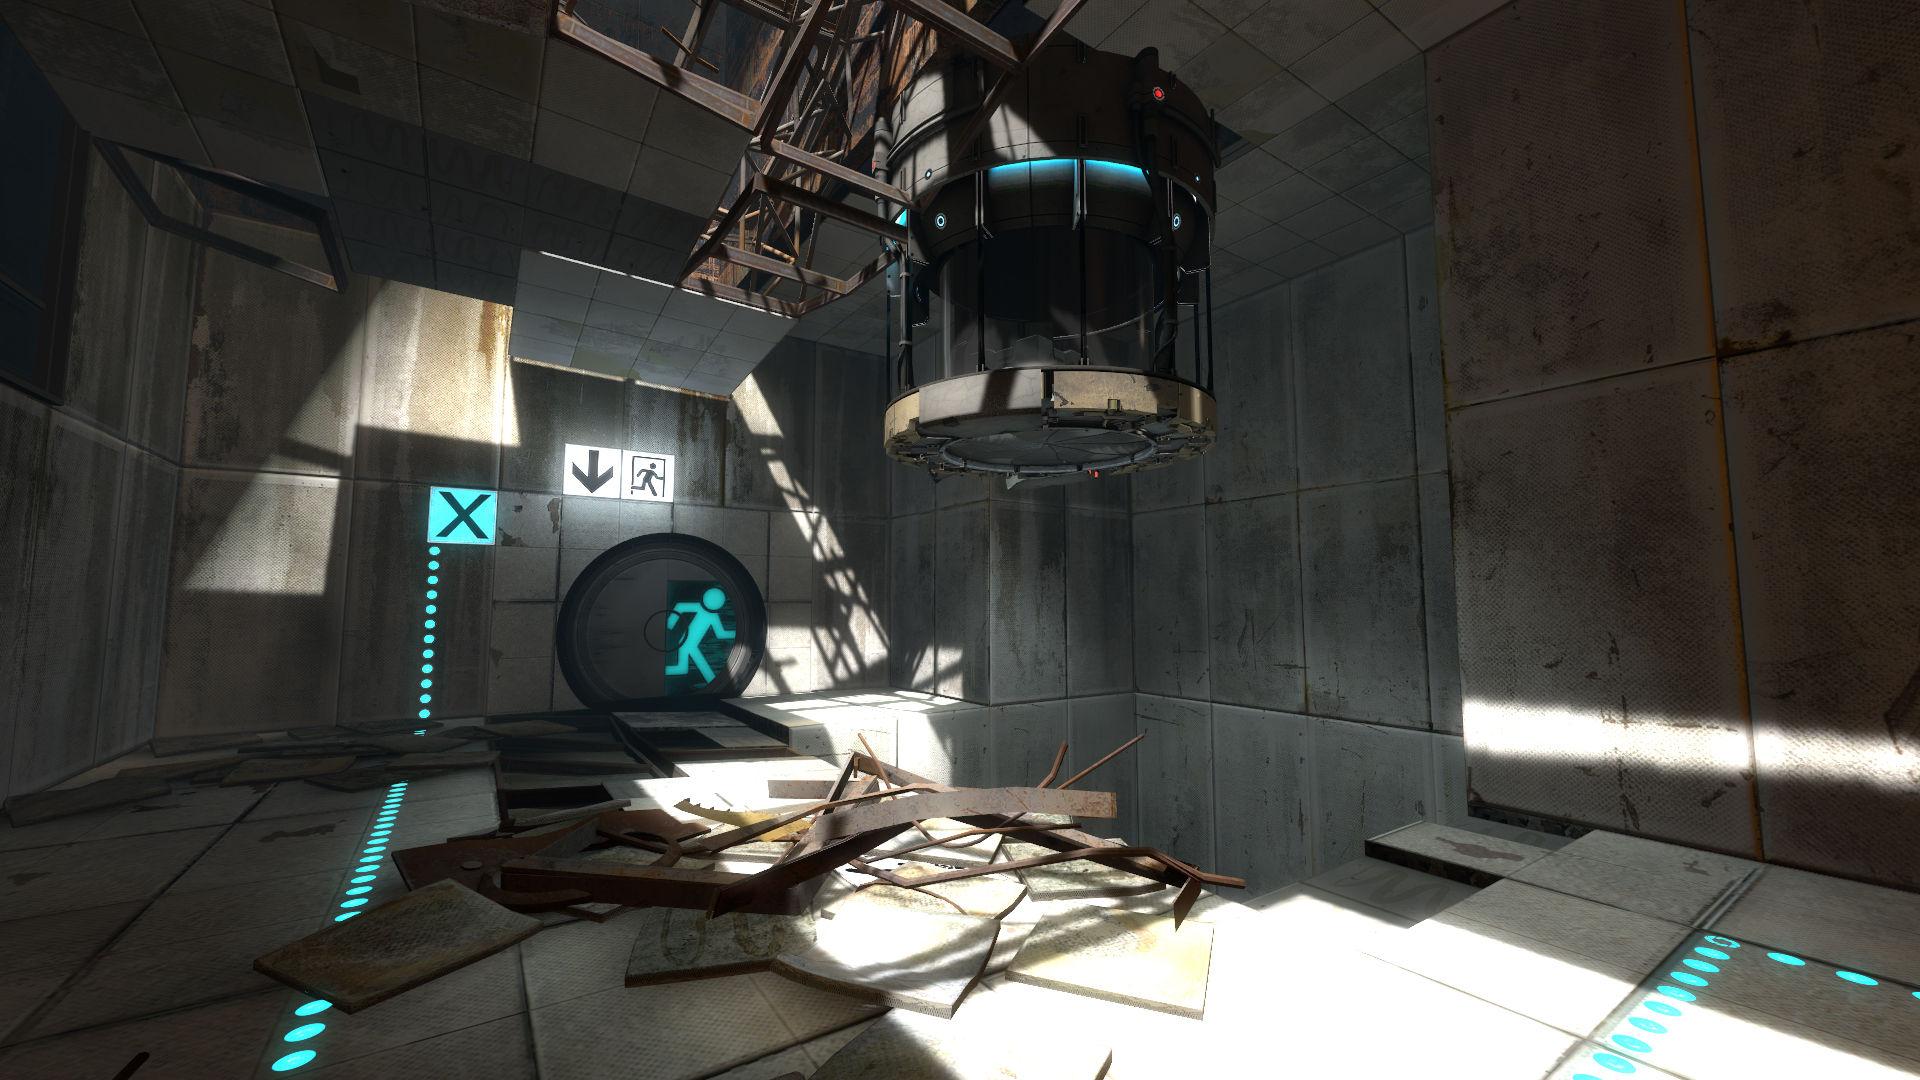 Screenshot №6 from game Portal 2